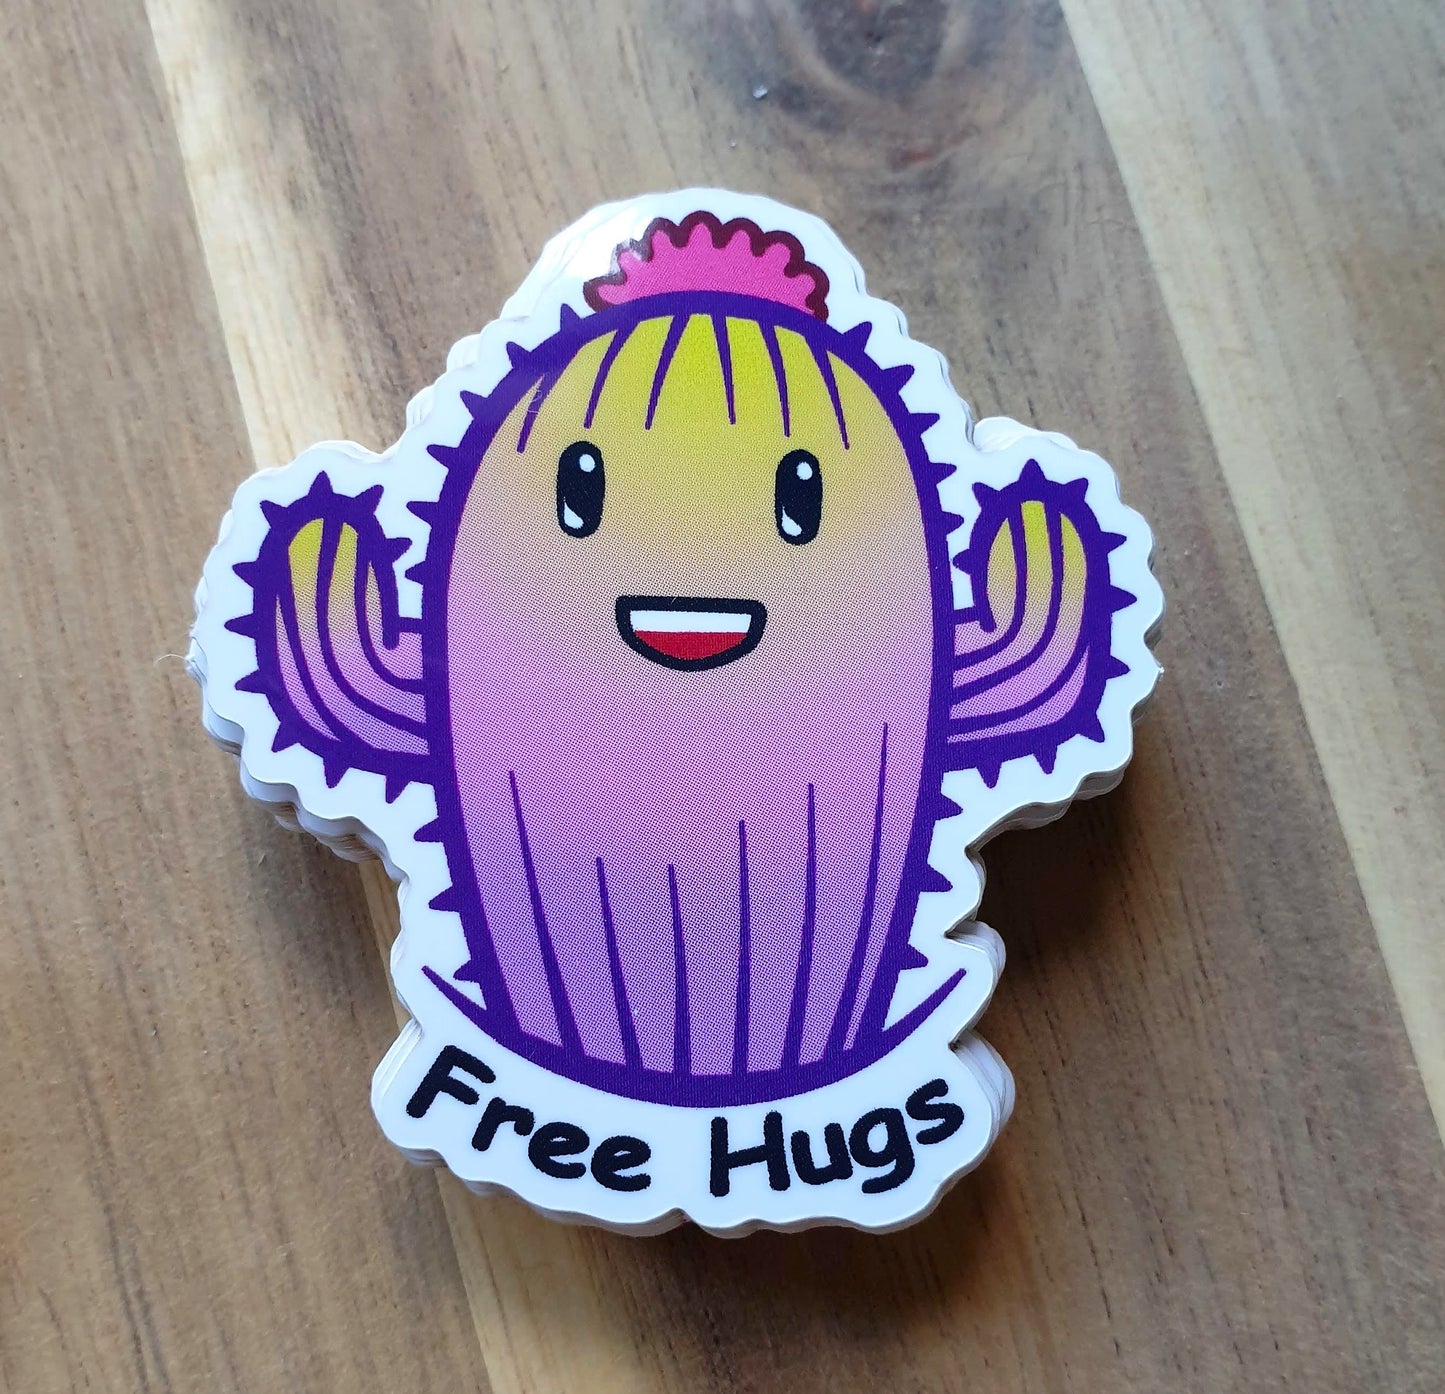 Cactus Sticker - "Free Hugs" - purple and yellow